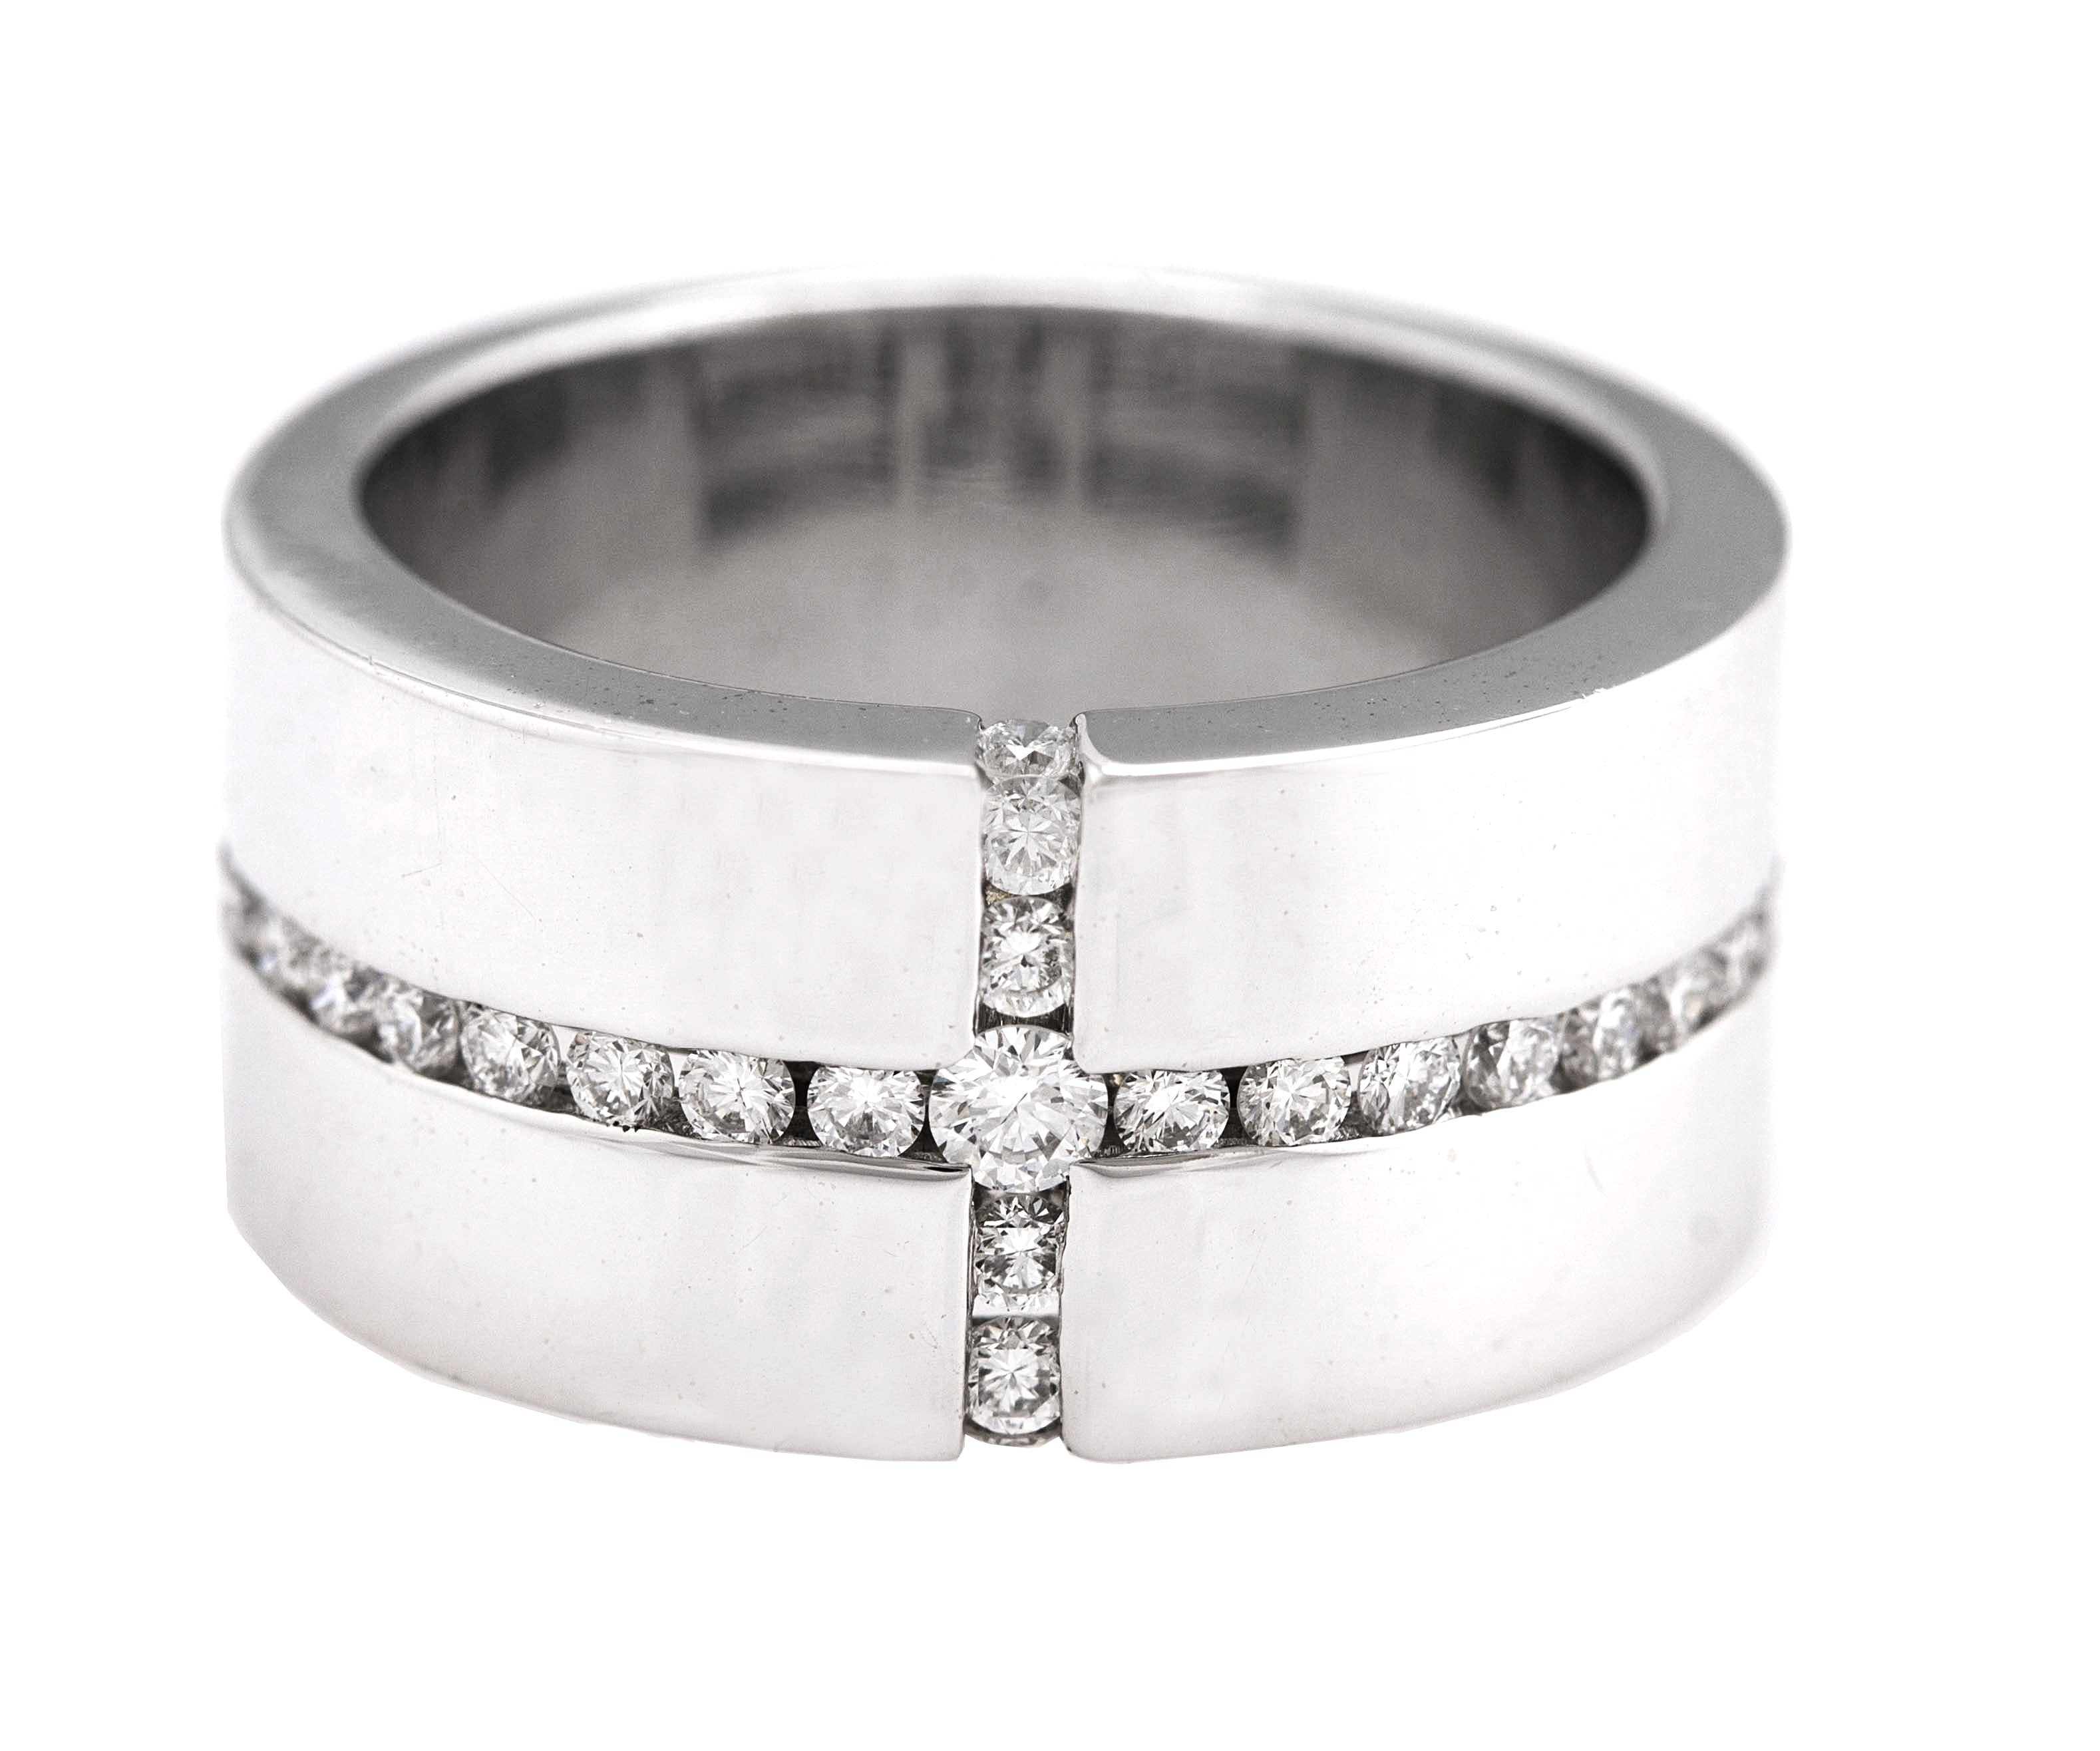 Movado Sterling Silver Diamond Ring - Stones set in Gold Bezels - Size 6 |  eBay